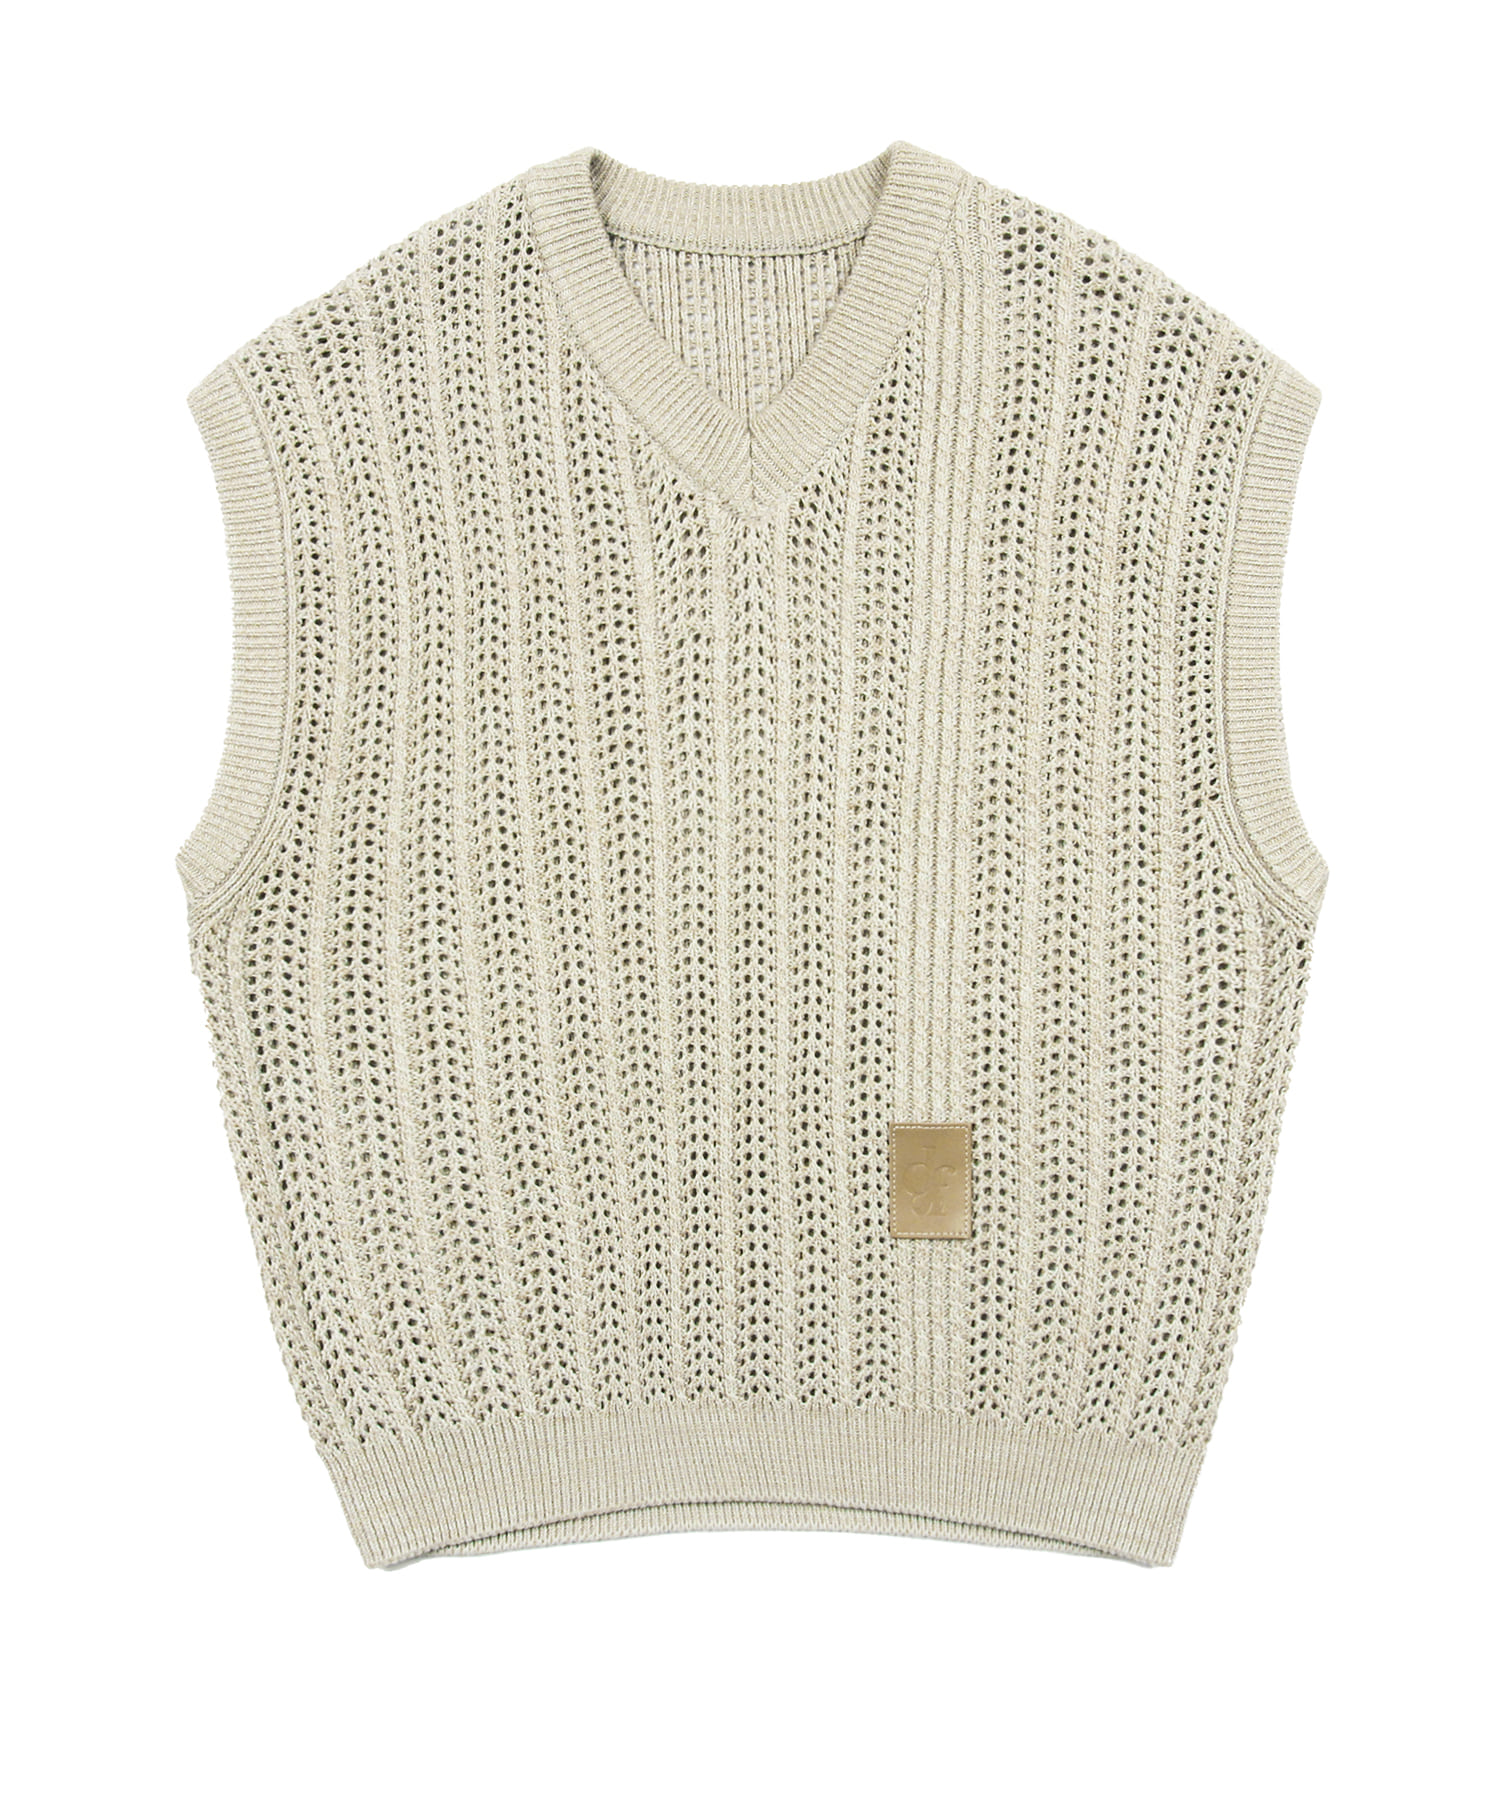 See-through fisherman knit vest BEIGE